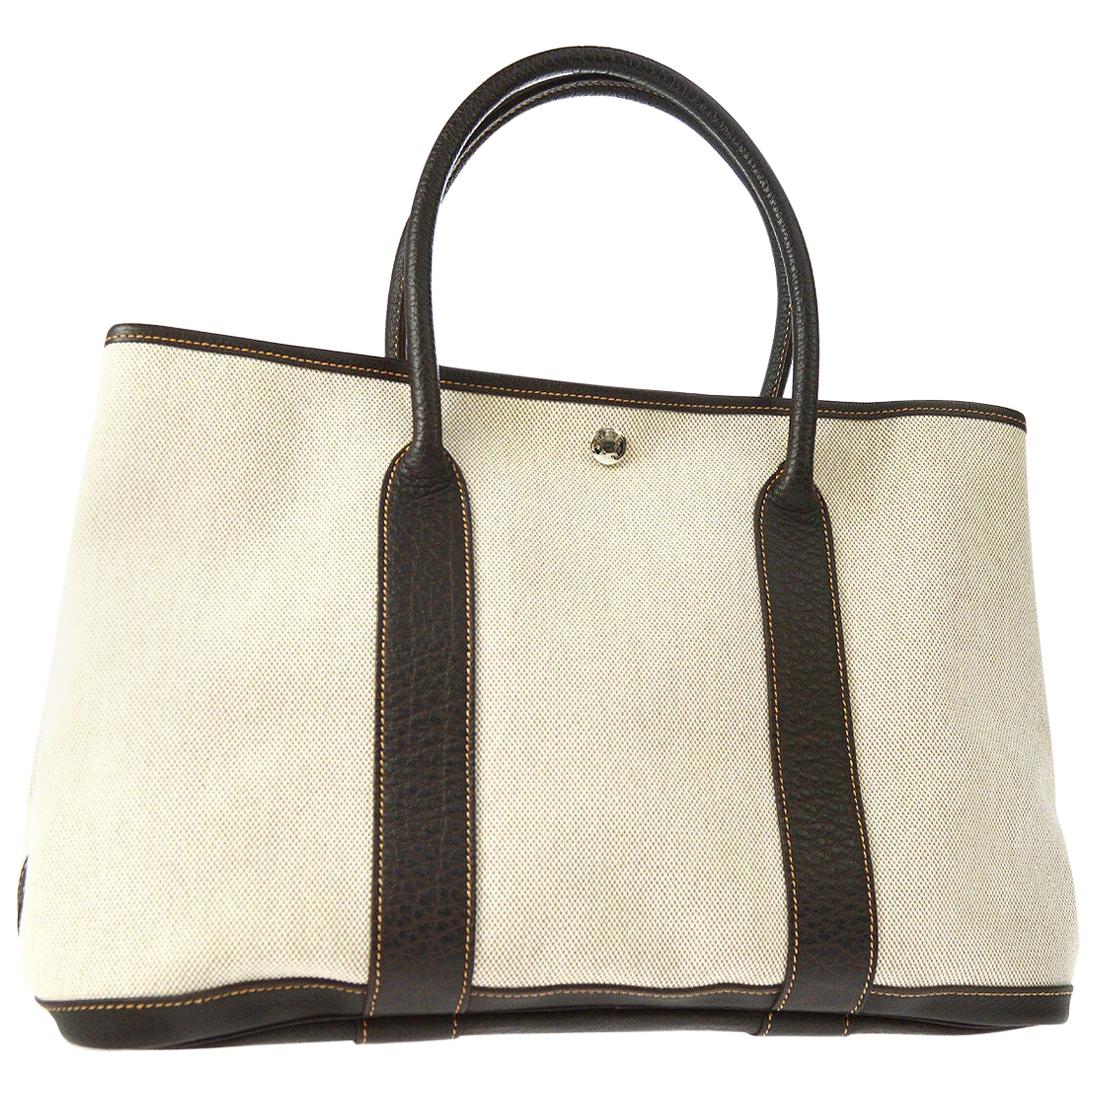 Hermes Tan Canvas Dark Brown Leather Top Handle Travel Carryall Tote Bag